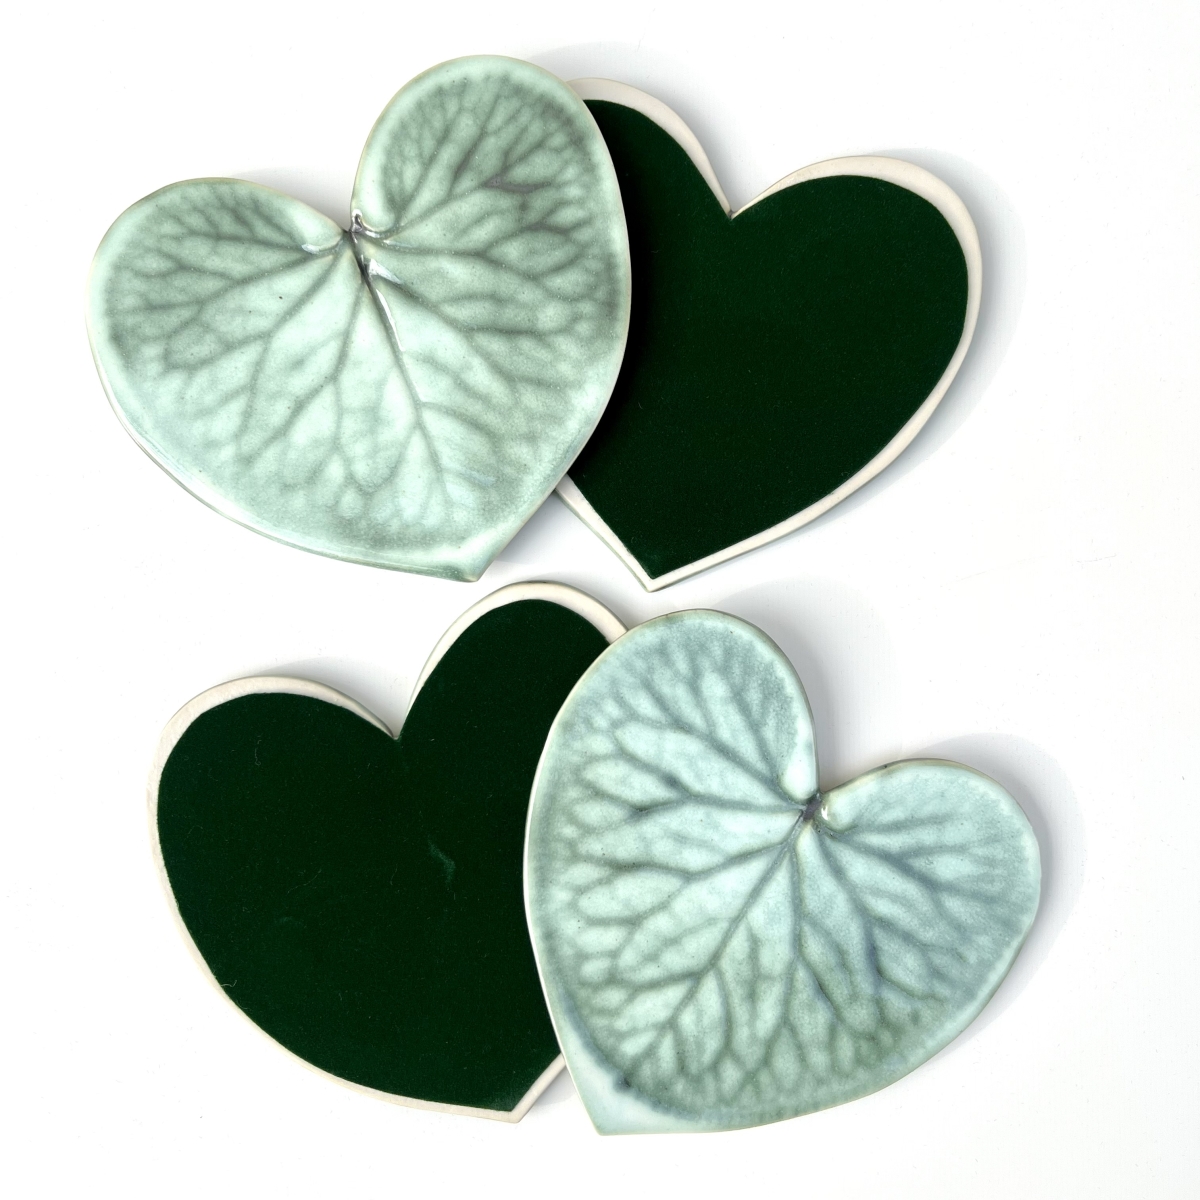 Heart Shaped Penny Hedge Leaf Coasters By Sonya Ceramic Art (Felt Backed)